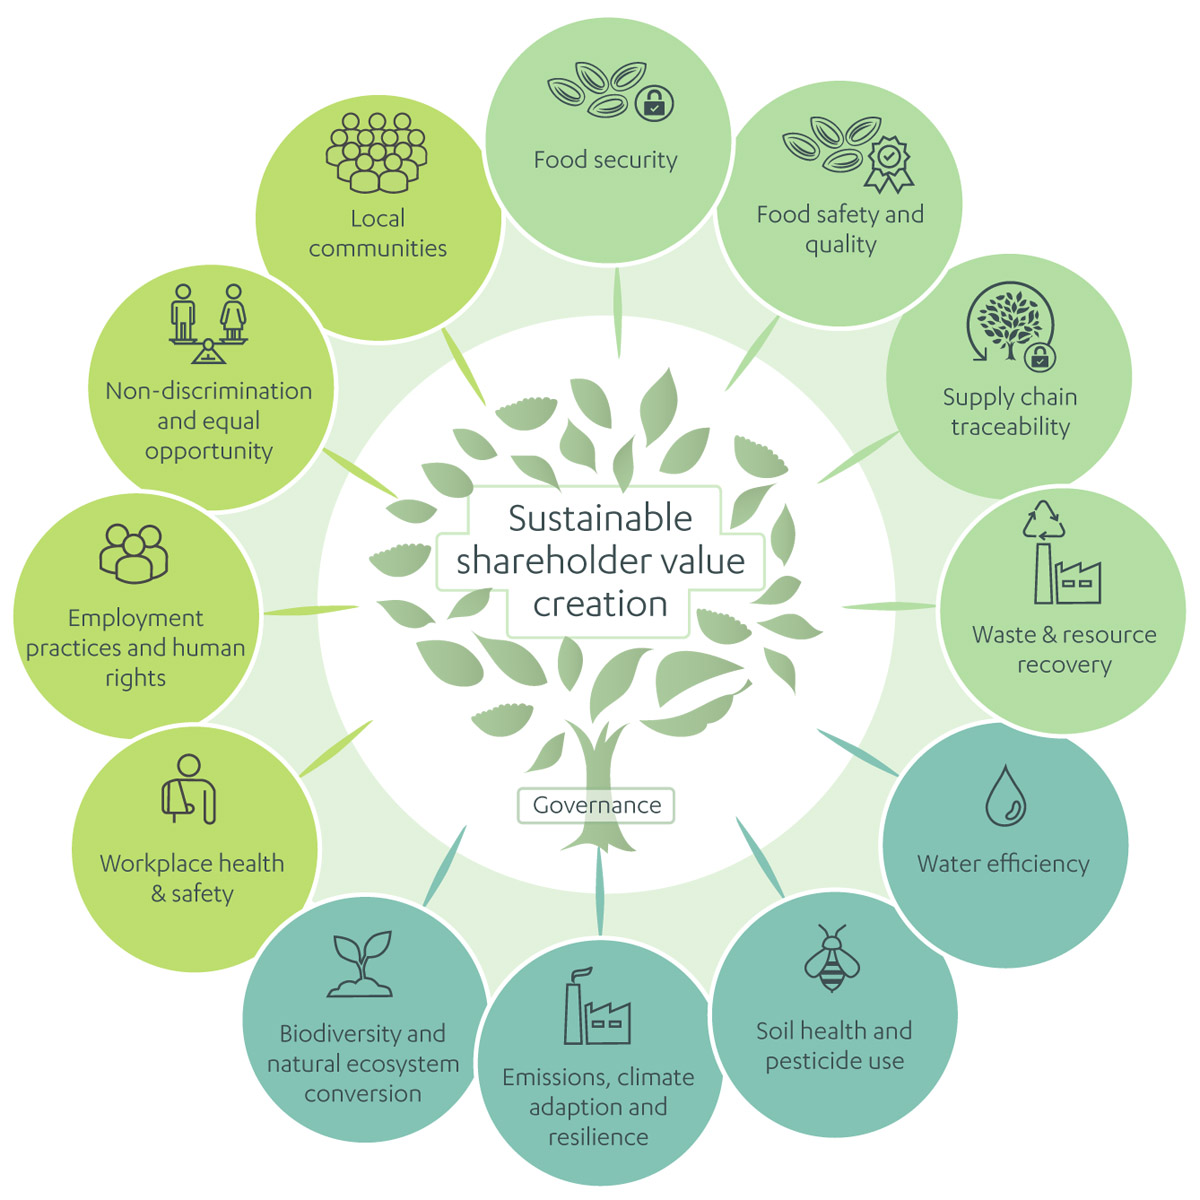 Sustainable shareholder value creation